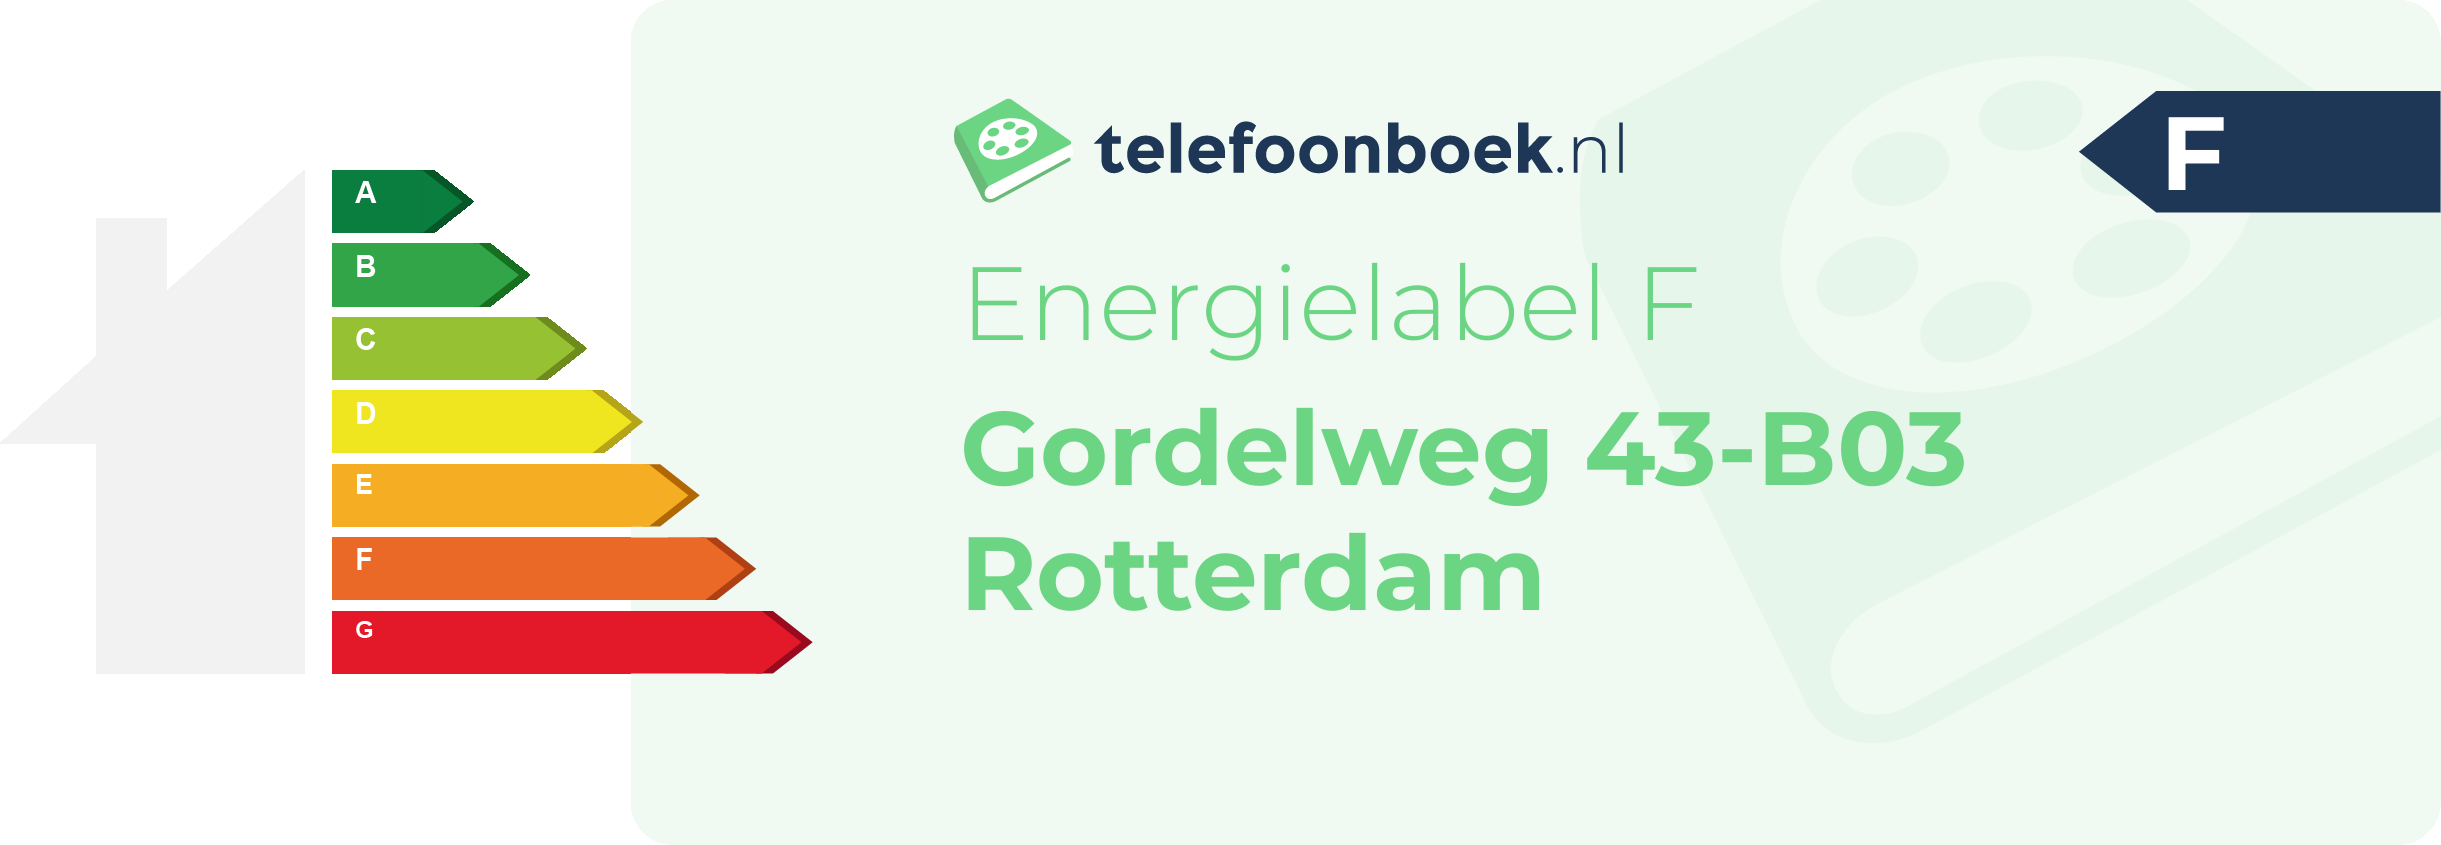 Energielabel Gordelweg 43-B03 Rotterdam